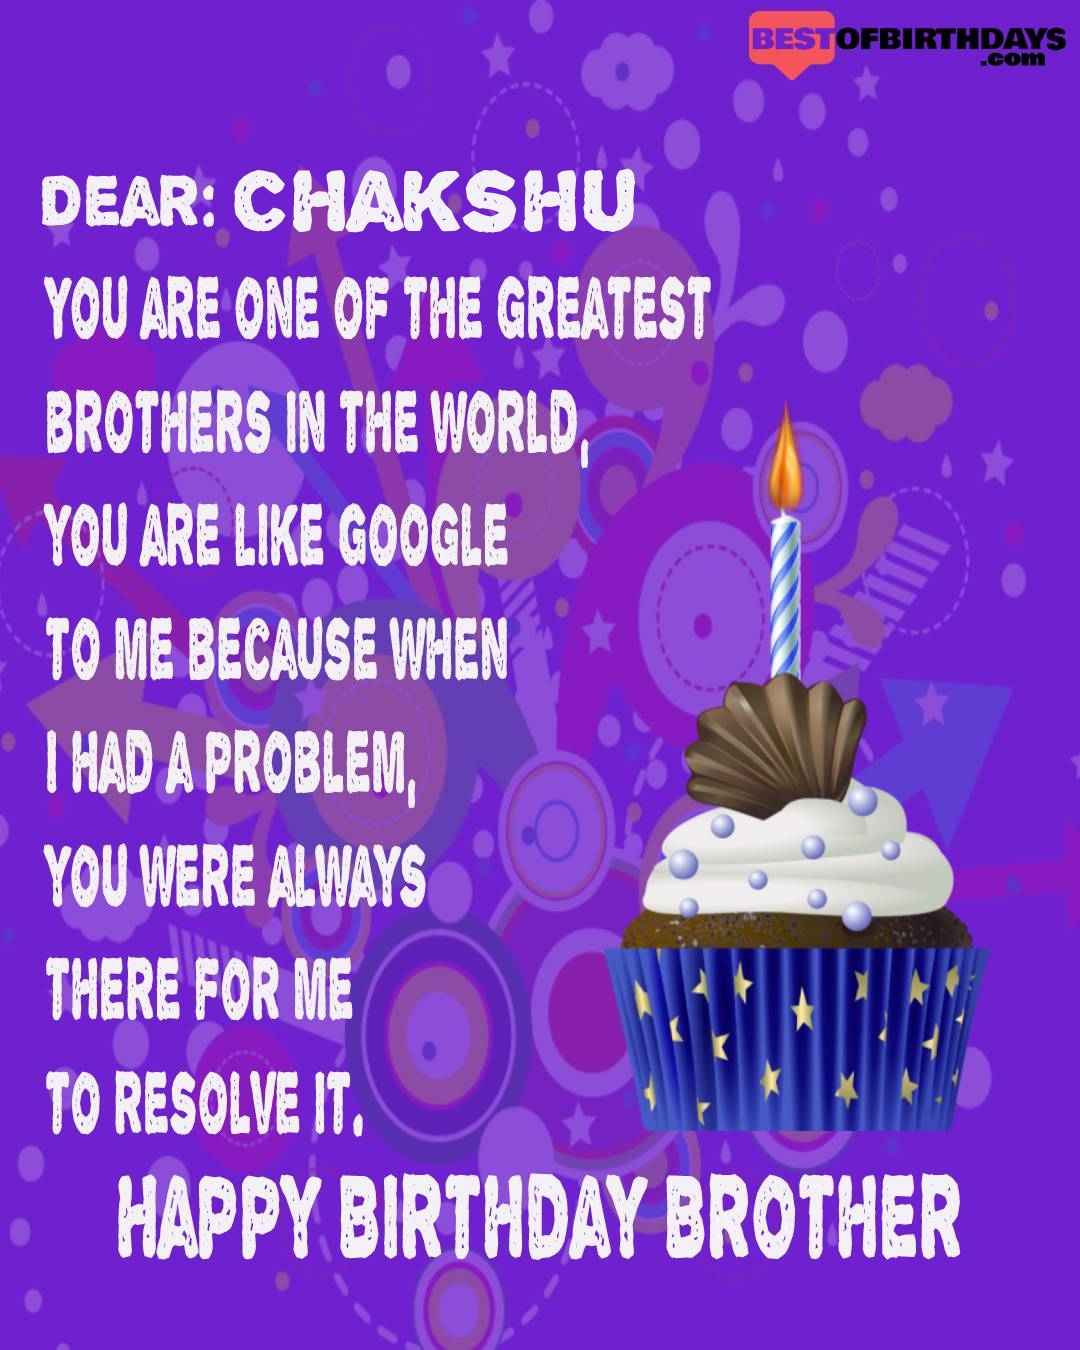 Happy birthday chakshu bhai brother bro